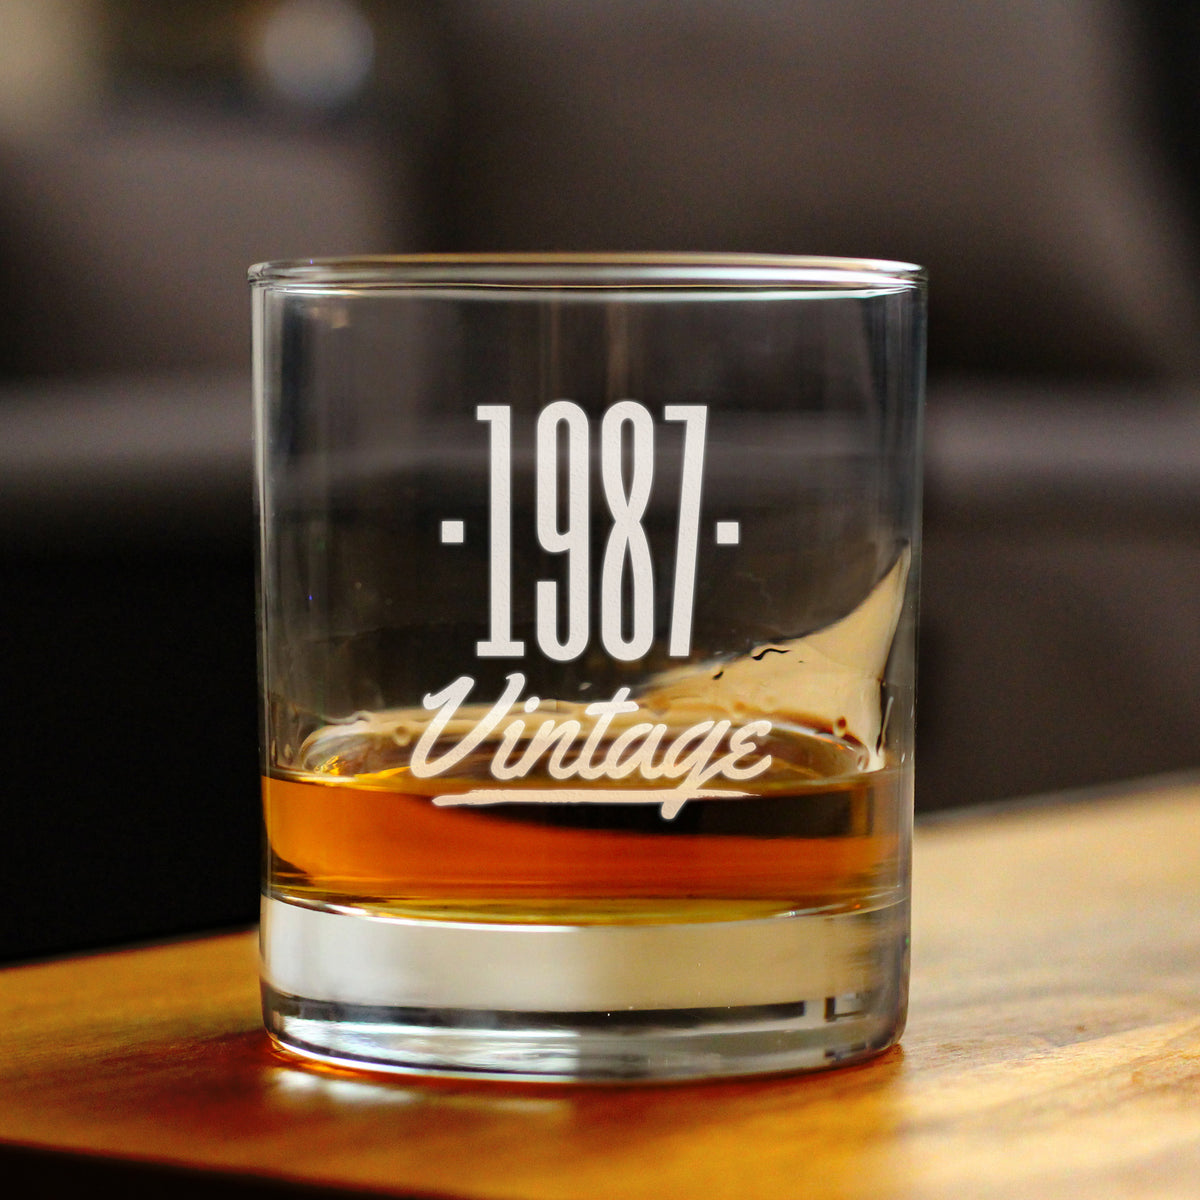 Vintage 1987 - Fun 37th Birthday Whiskey Rocks Glass Gifts for Men &amp; Women Turning 37 - Retro Whisky Drinking Tumbler